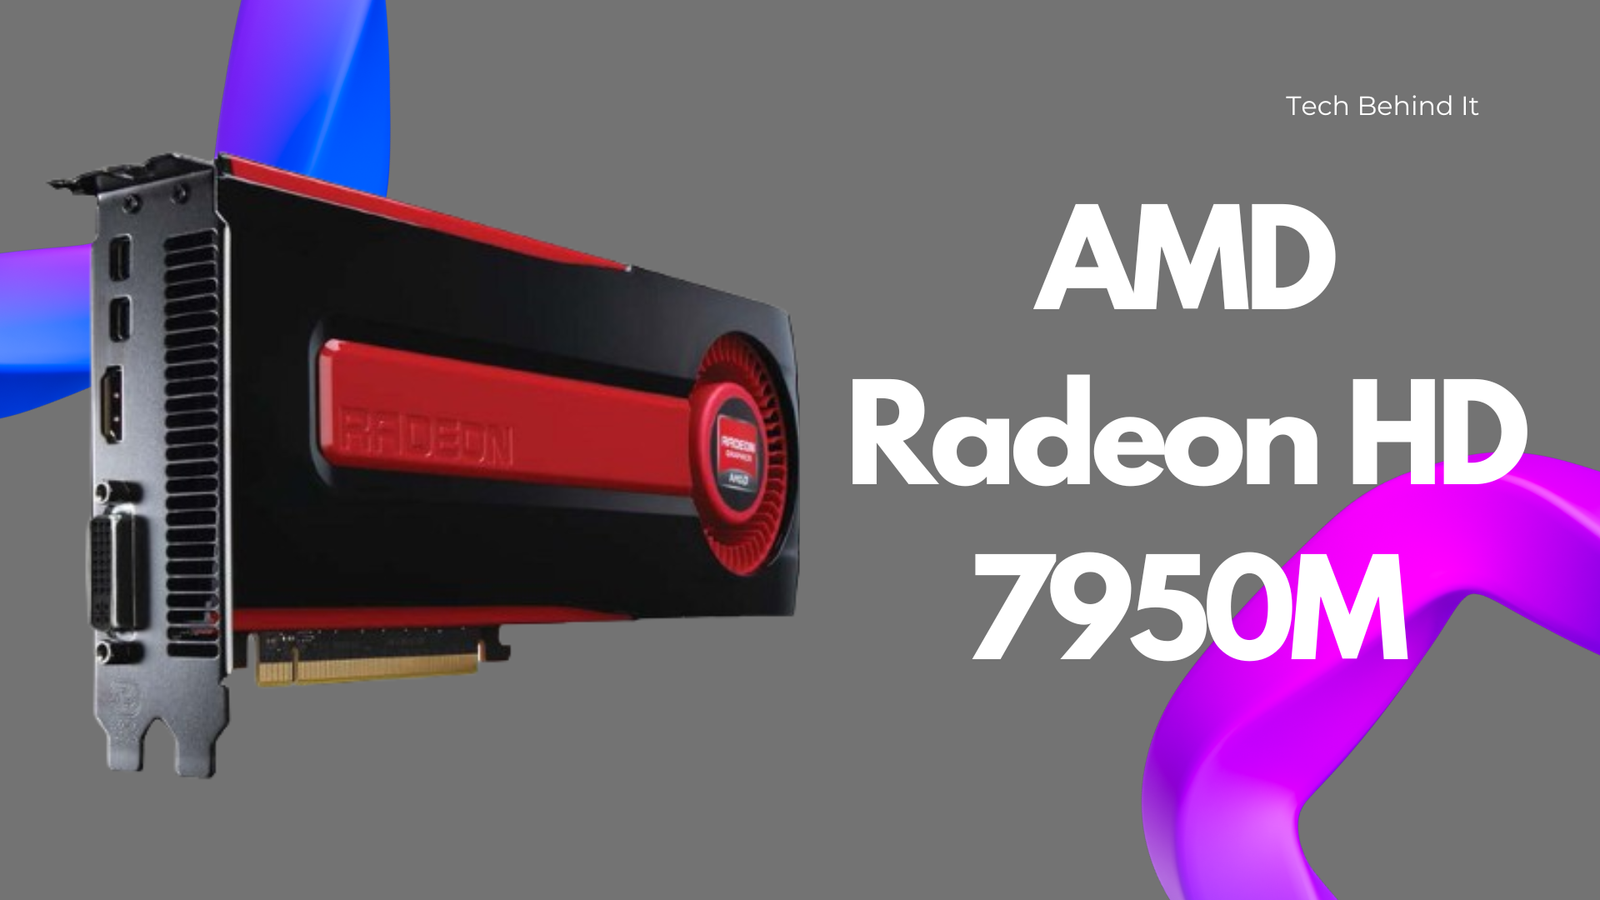 A Deep Dive into the AMD Radeon HD 7950M Graphics Powerhouse